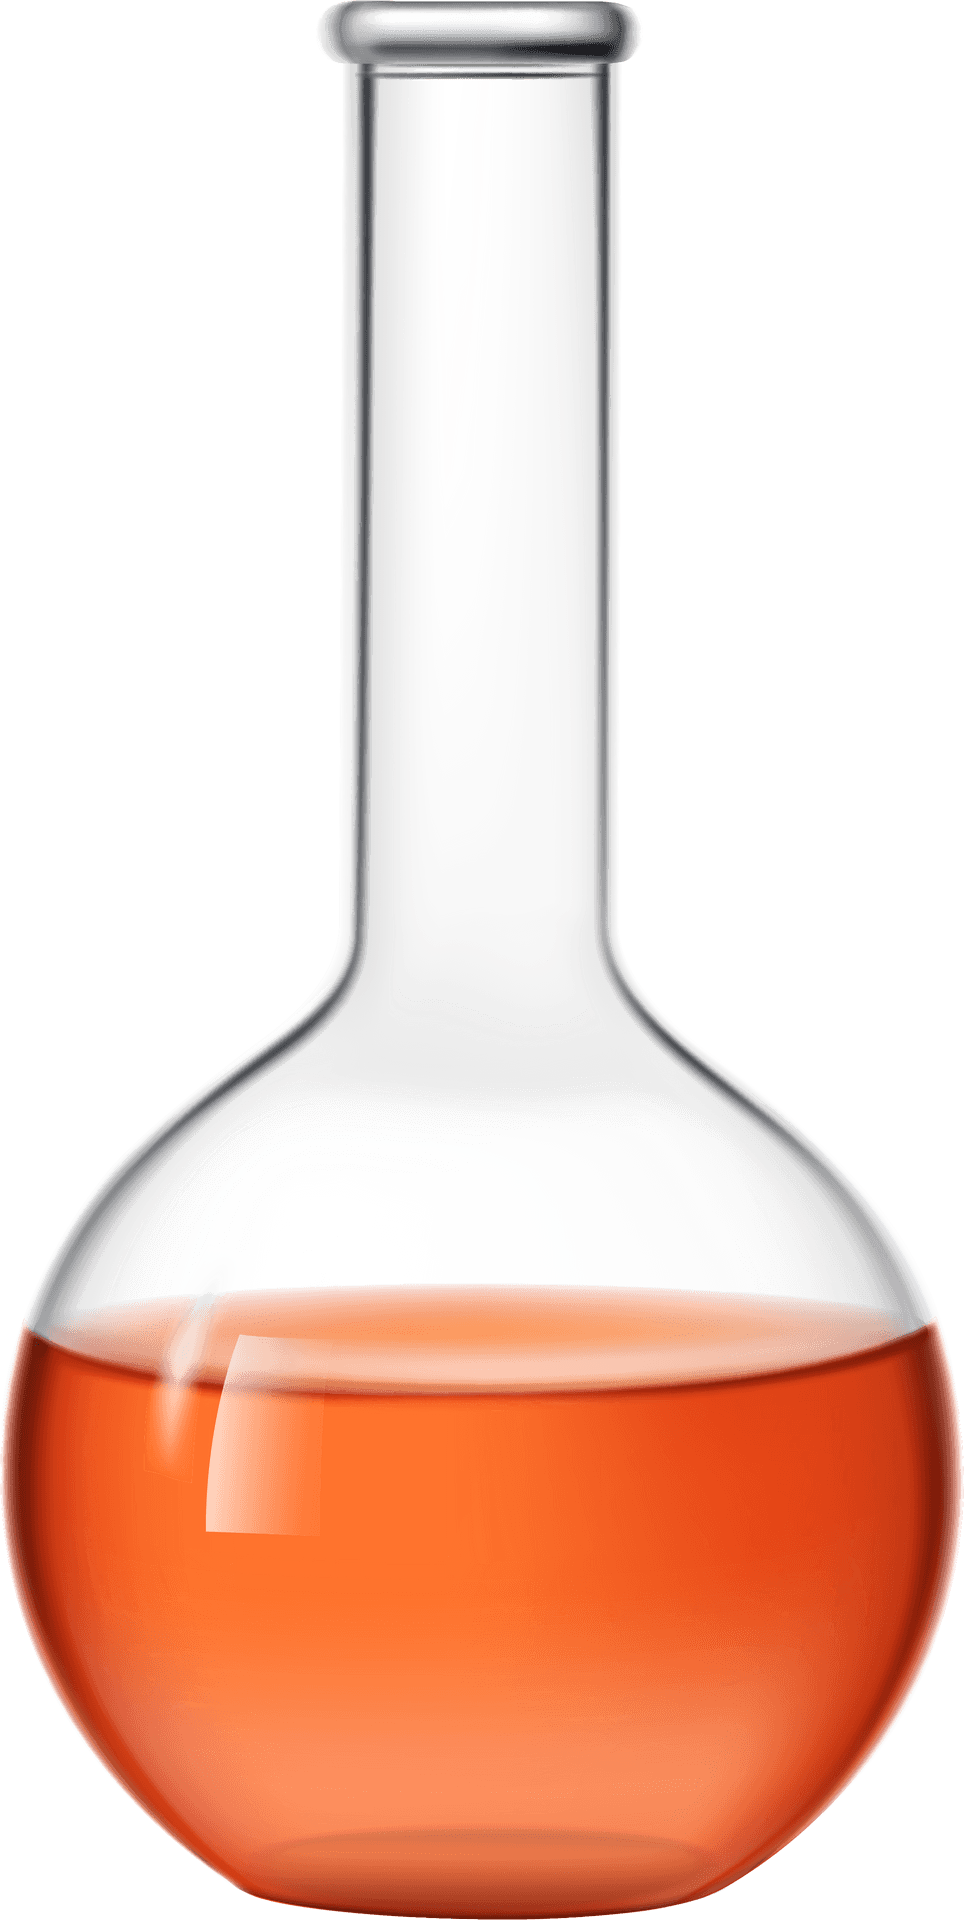 Orange Liquidin Flask PNG